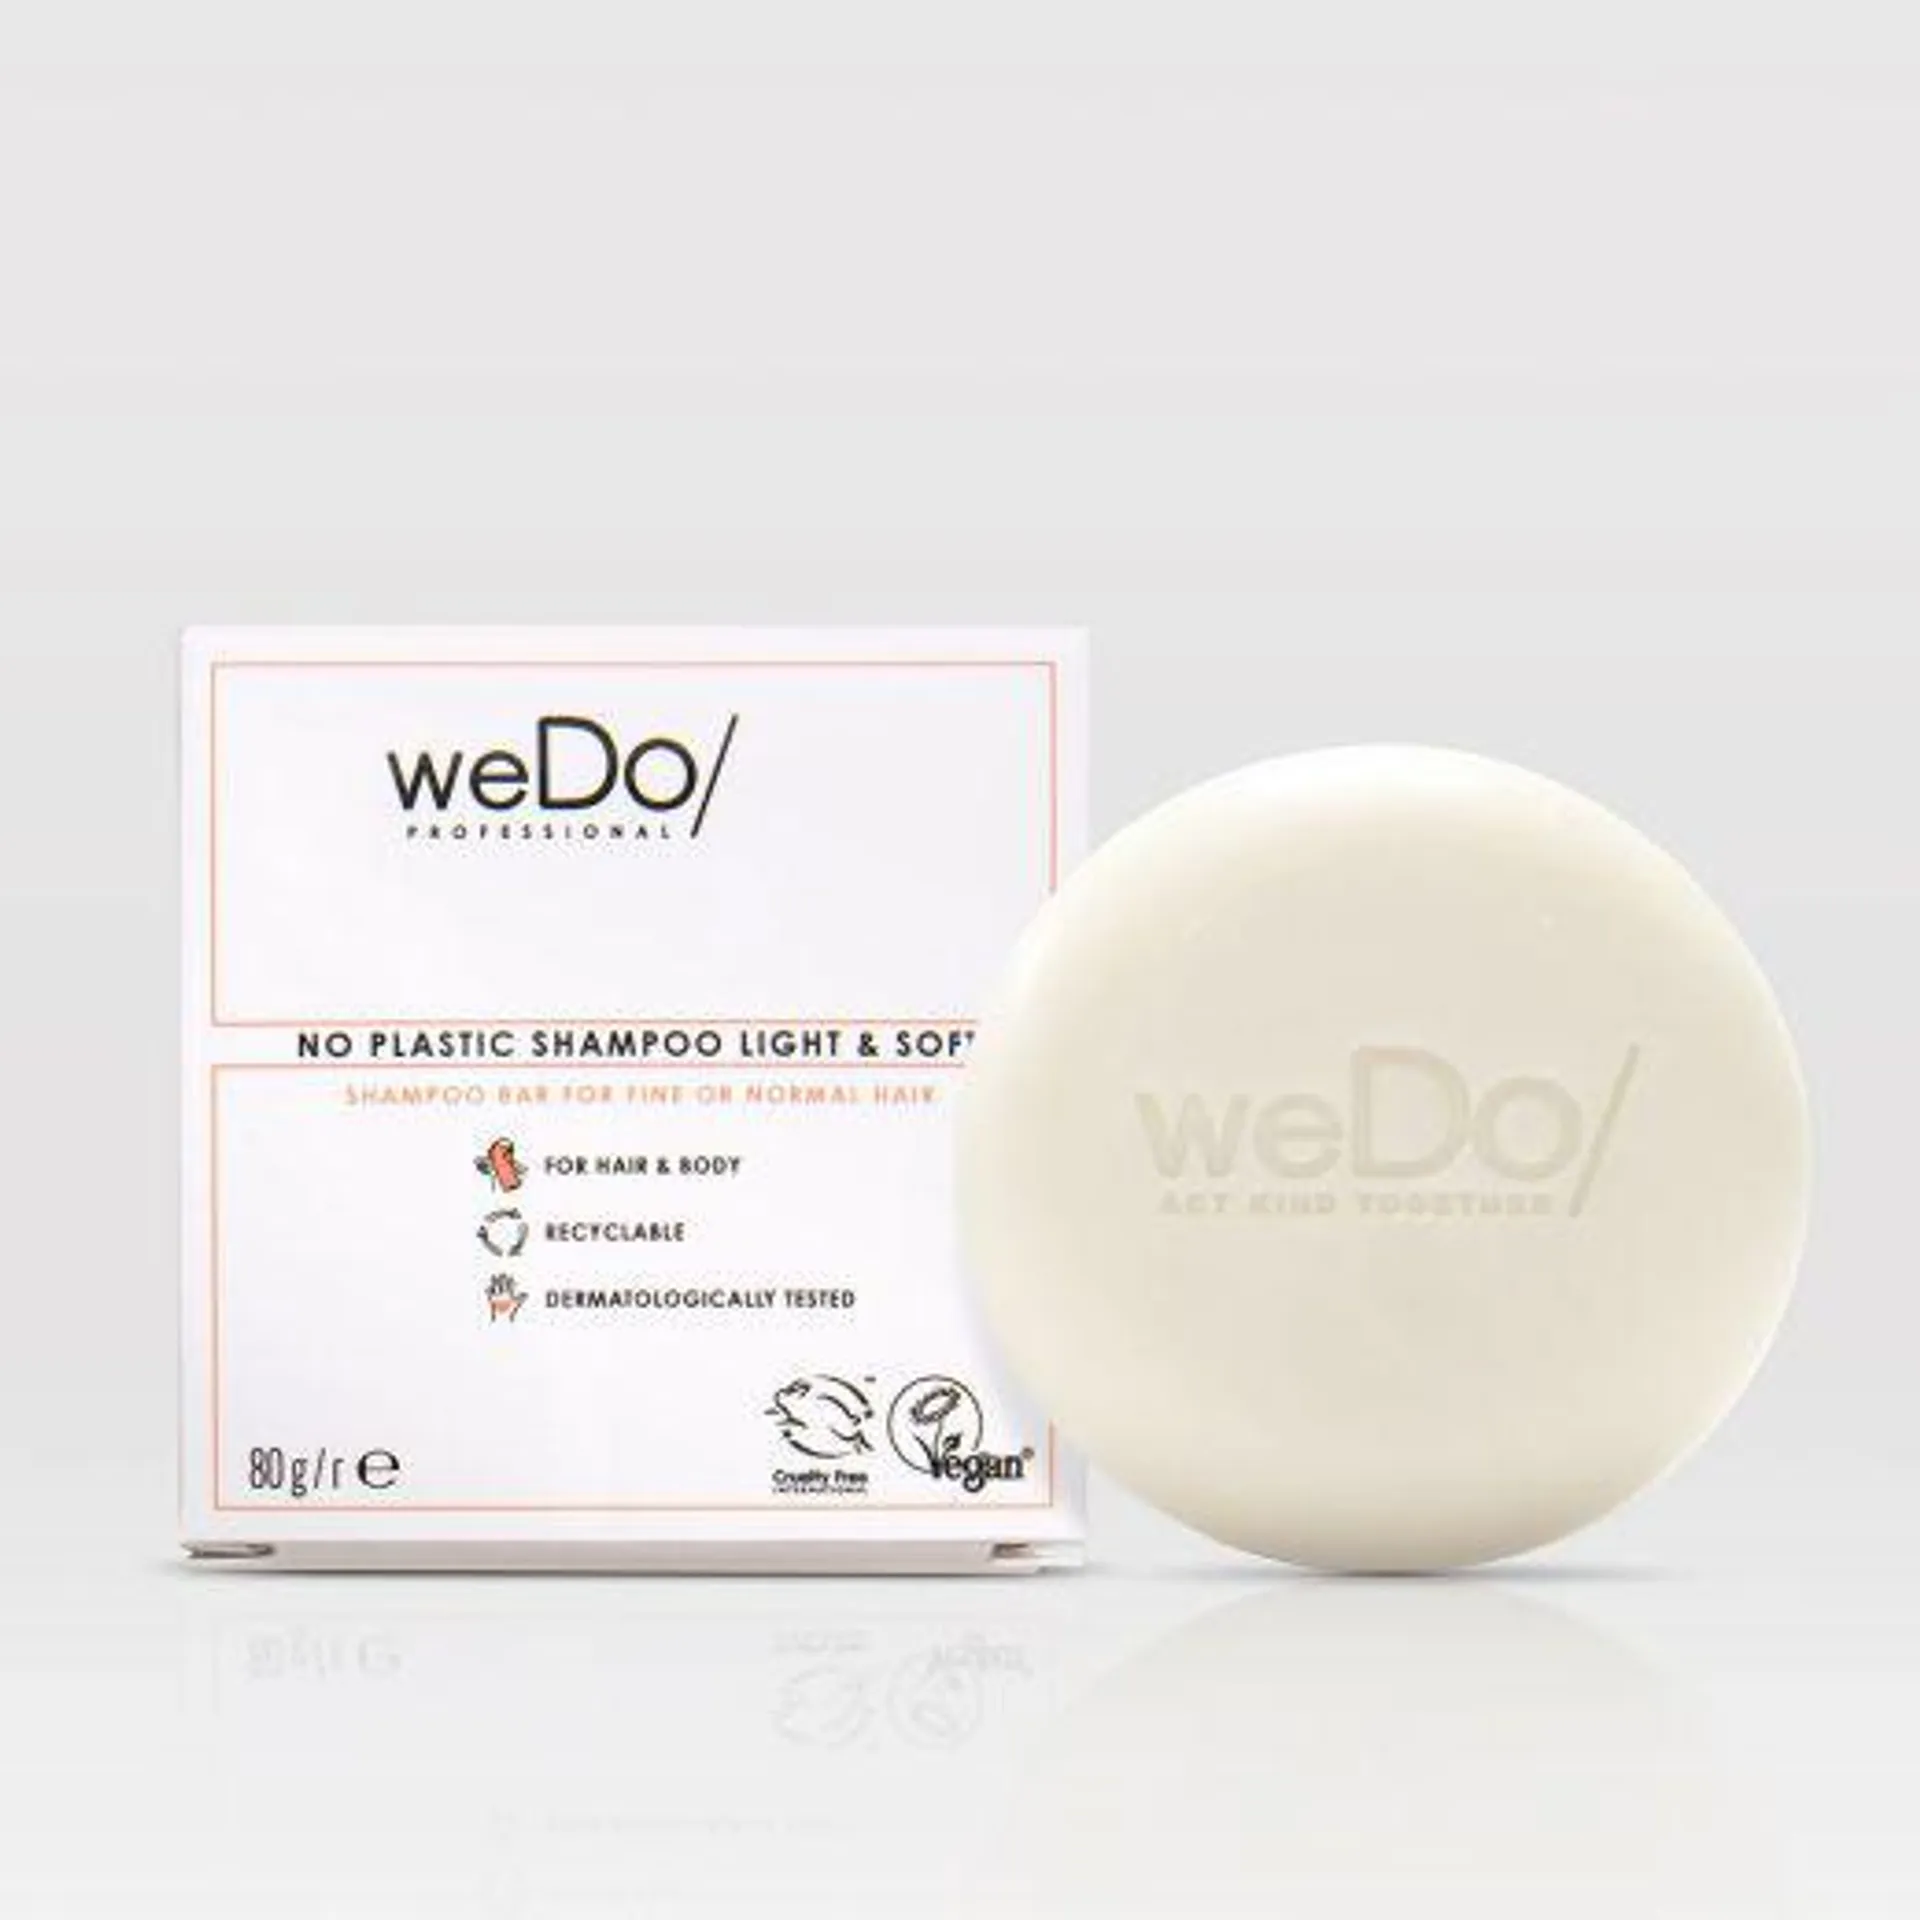 weDo Professional Light & Soft No Plastic Shampoo 80g